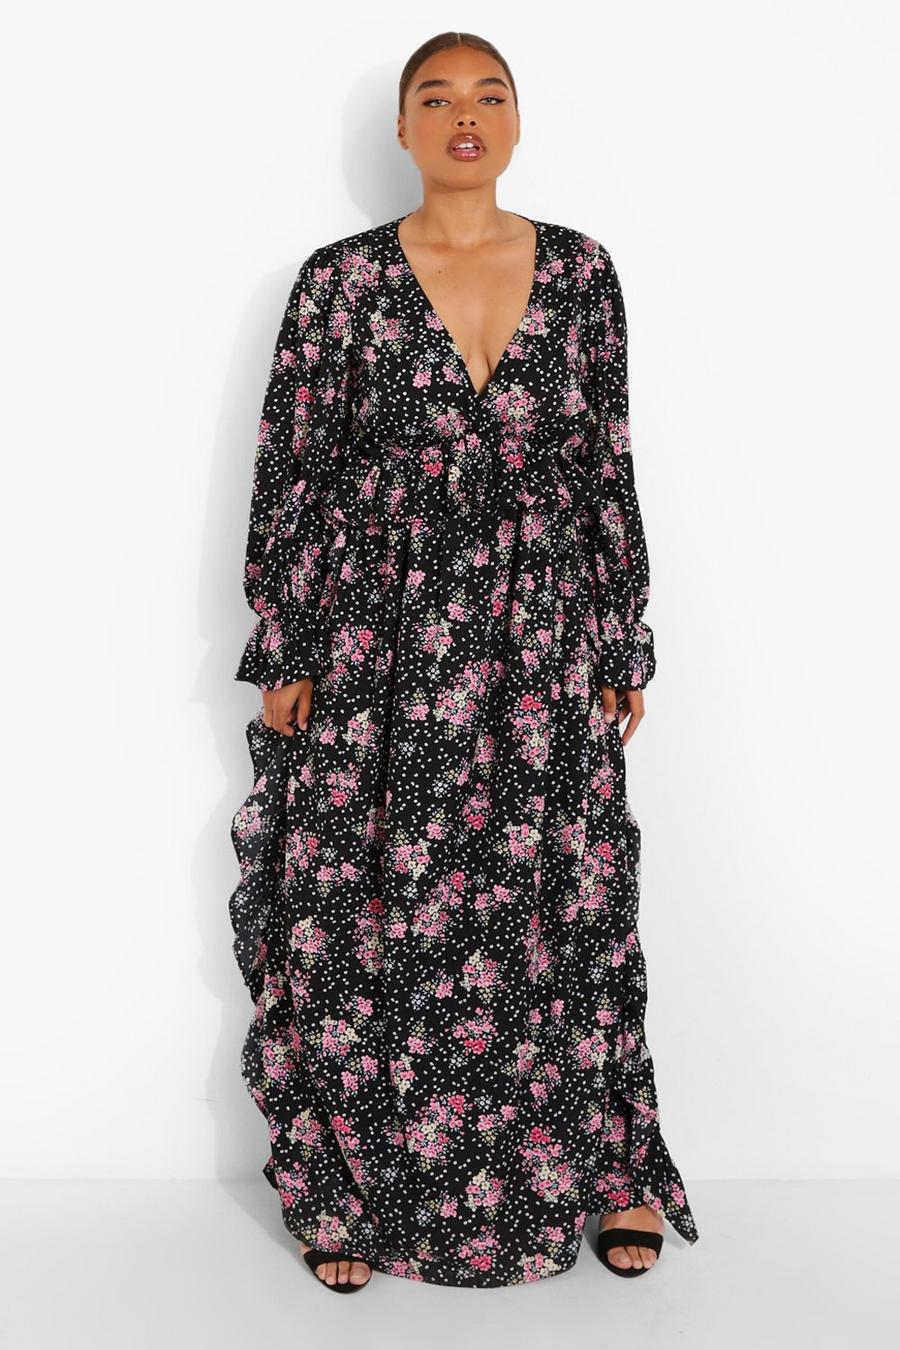 Nemidor Womens Plus Size Boho Ditsy Floral Print Maxi Dress